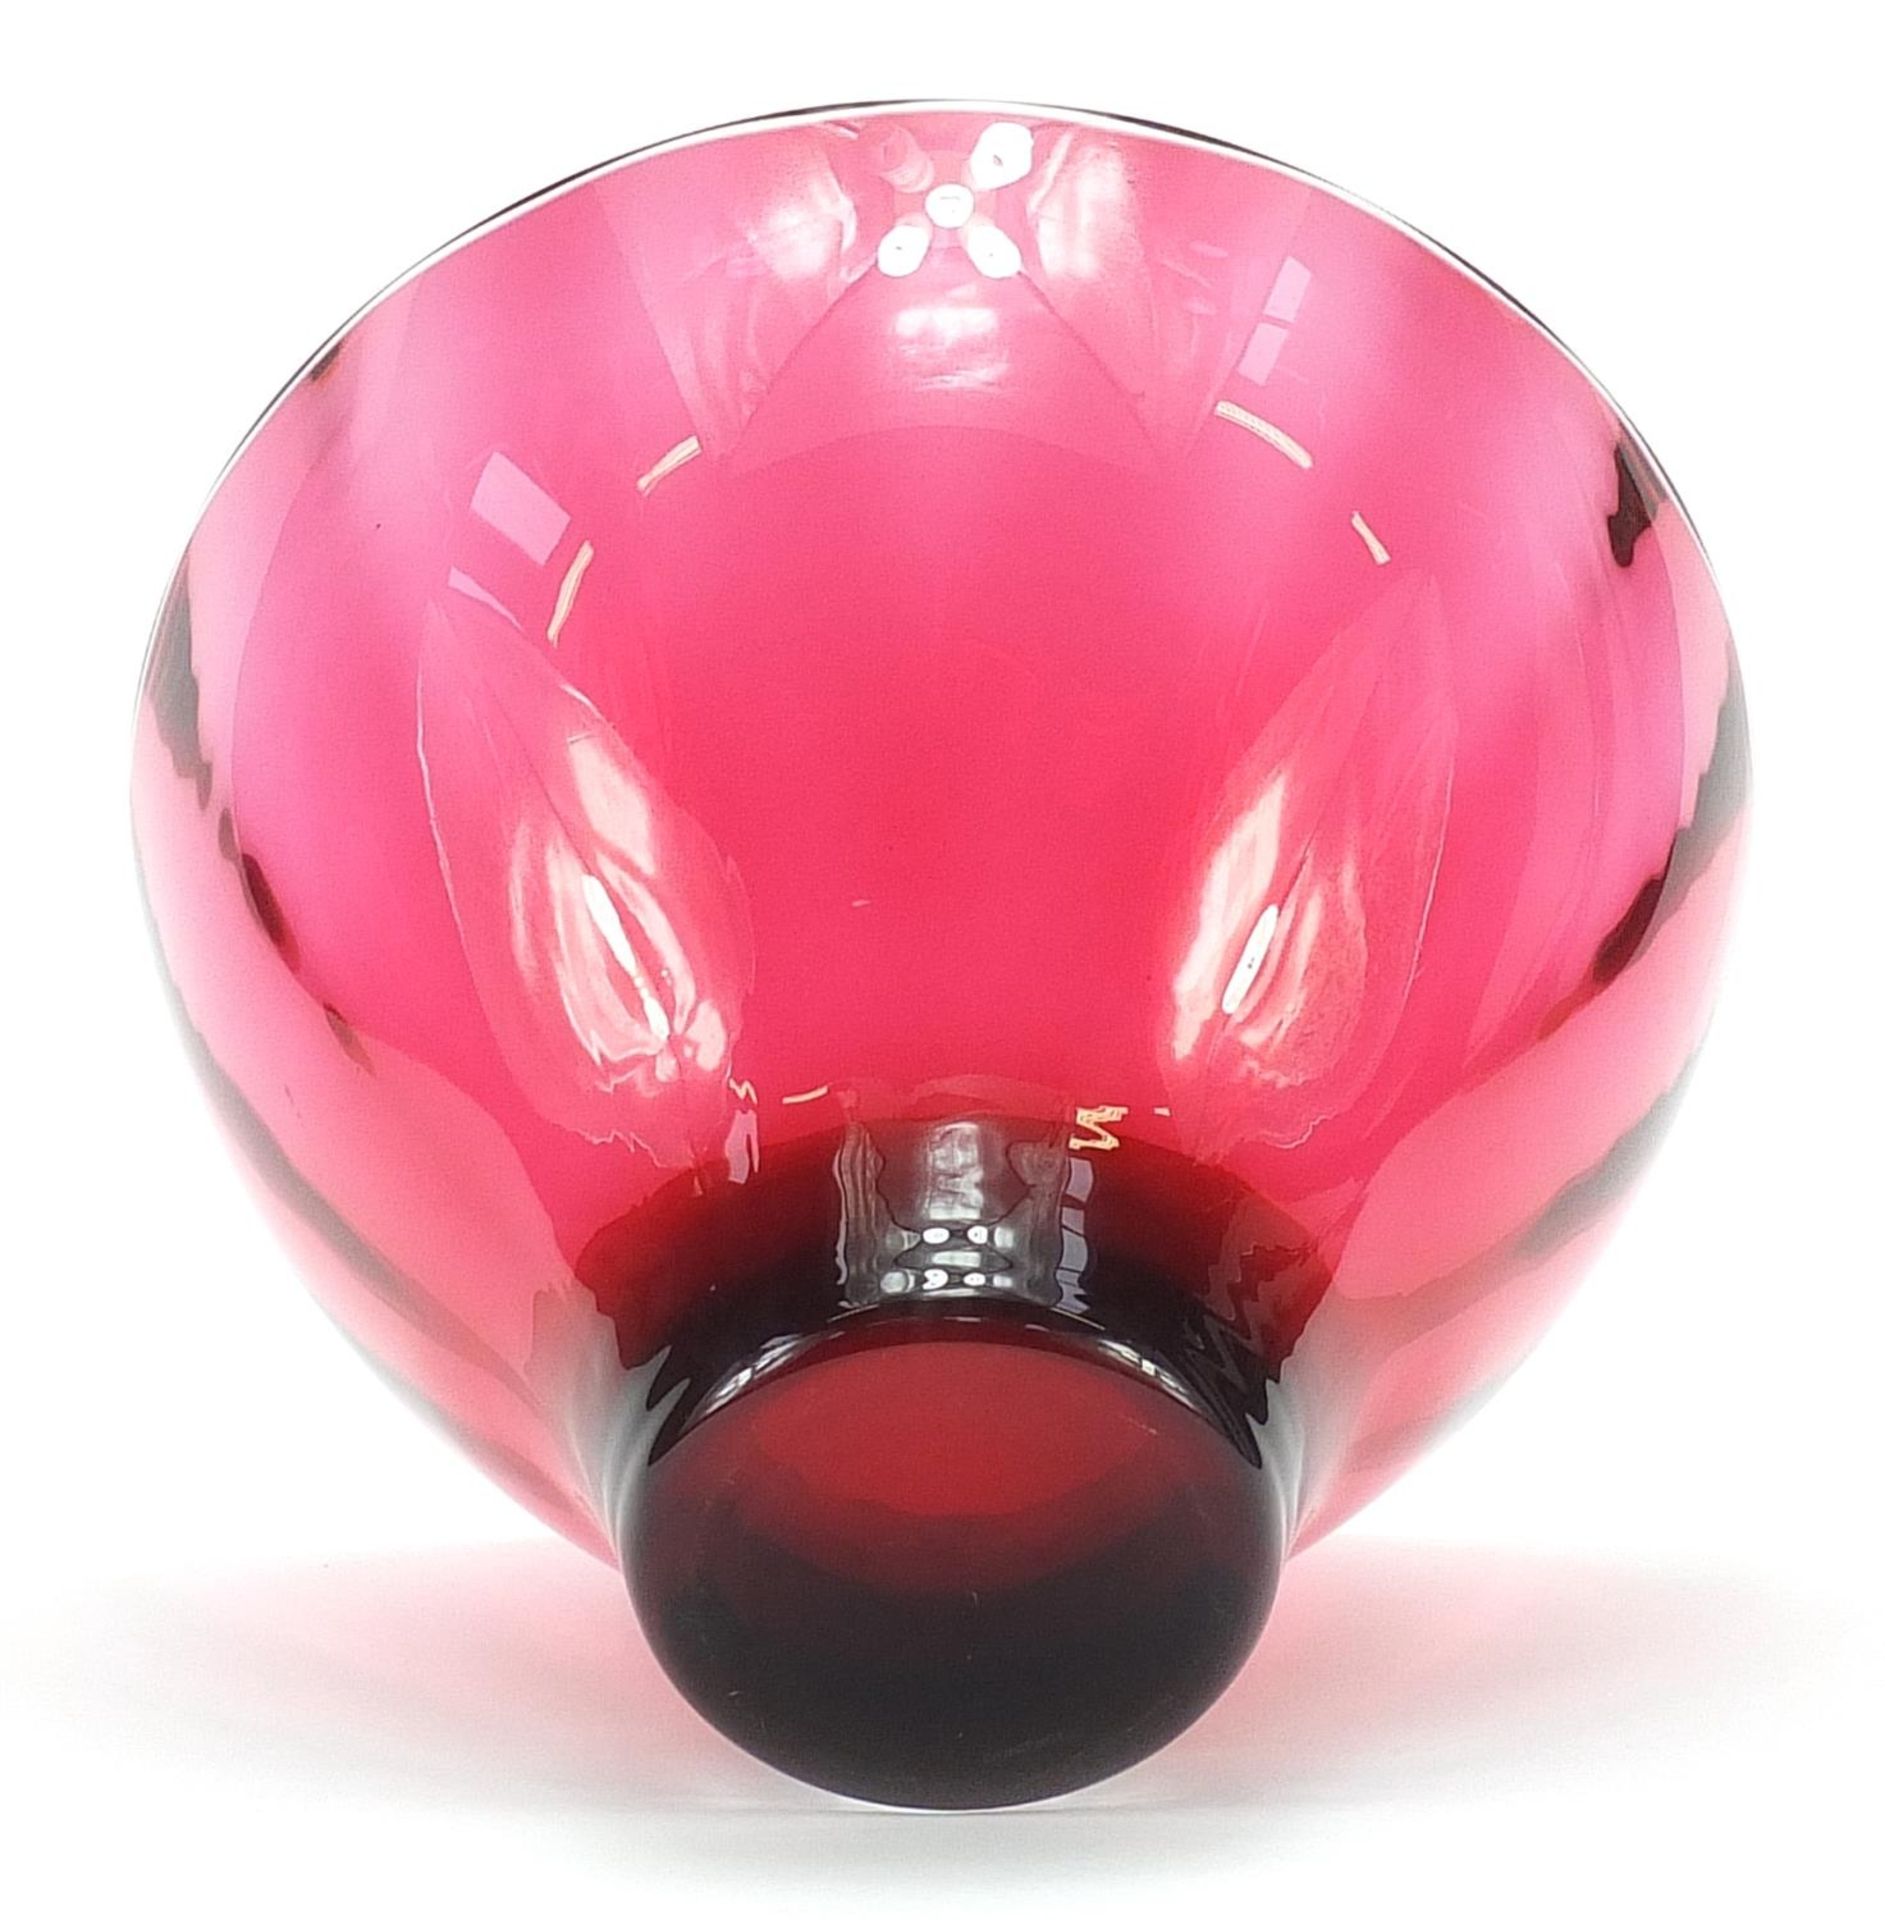 Dartington Crystal ruby glass bowl, 17cm high x 23.5cm in diameter - Image 3 of 4